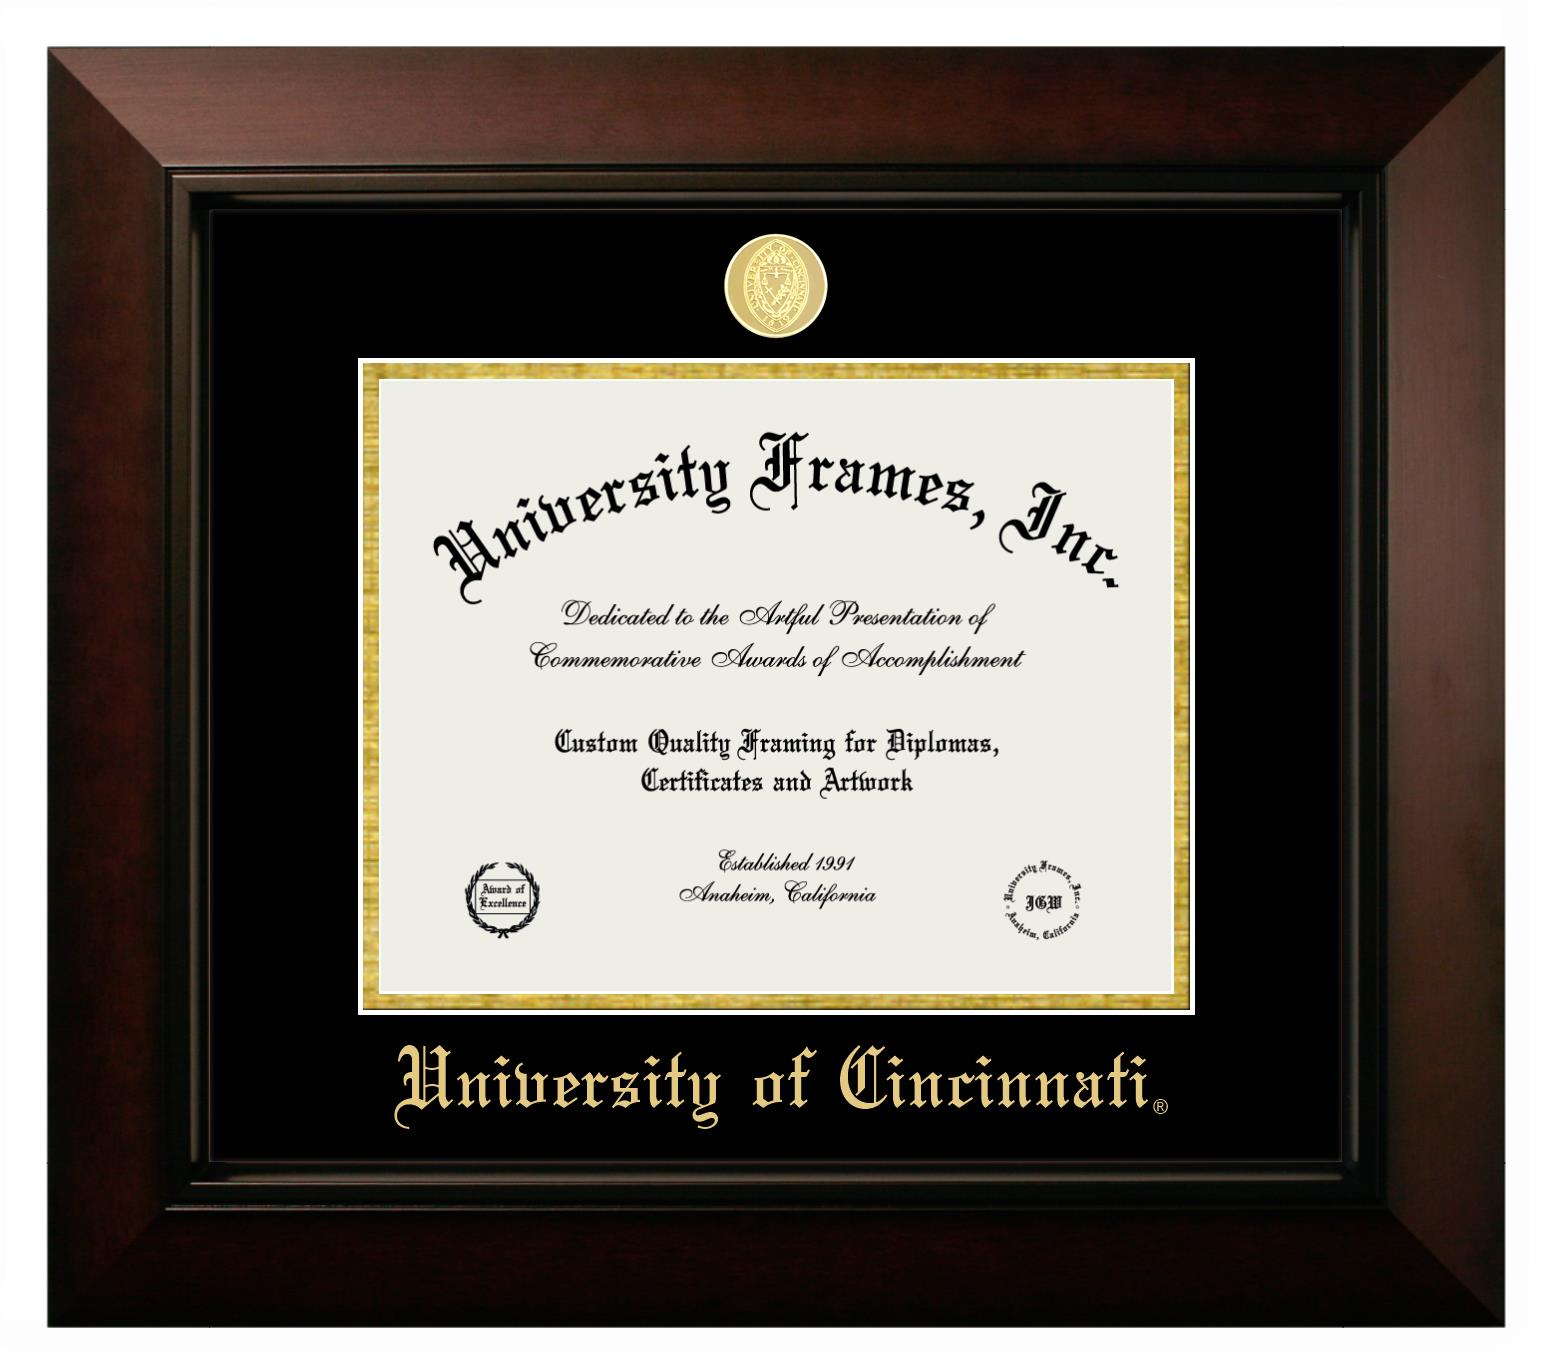 University of Cincinnati Diploma Frame in Legacy Black Cherry with Black Mat